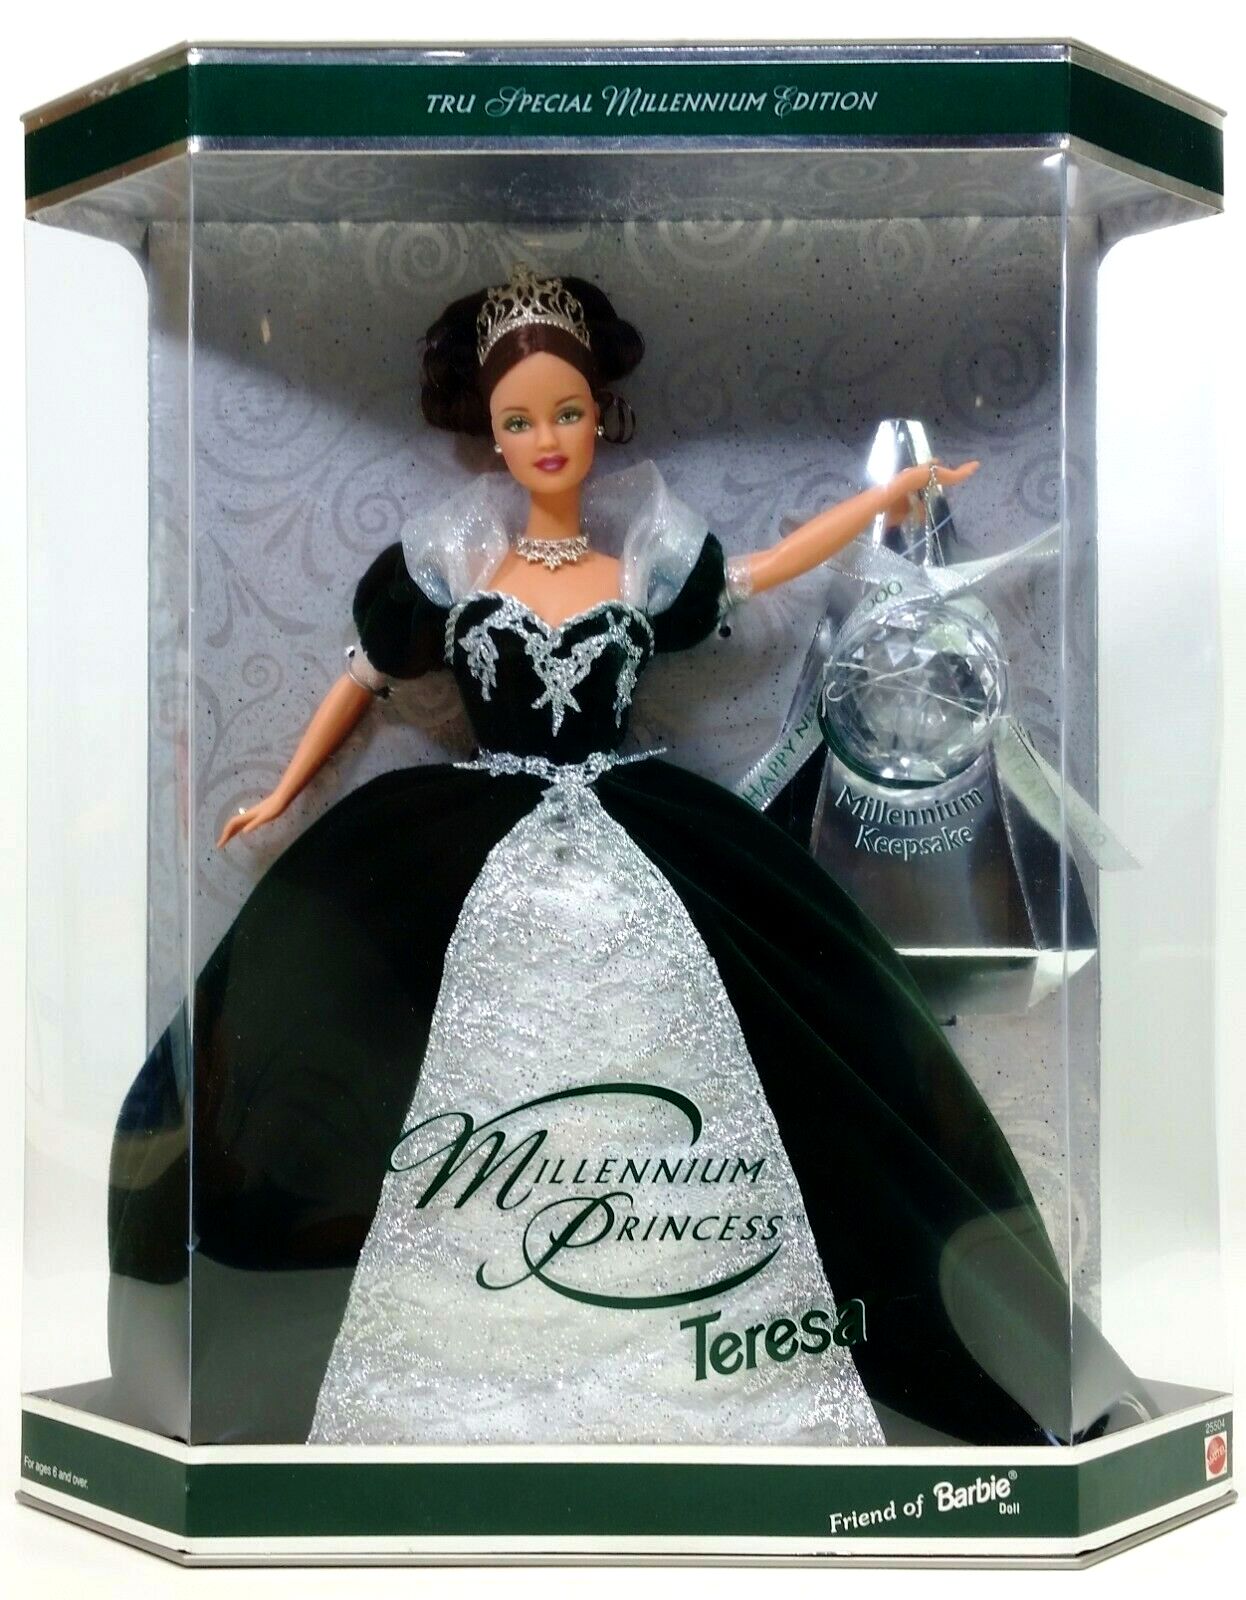 Rare Green Royal Princess Wales Diana Barbie Doll Way Out Toys Collectible 